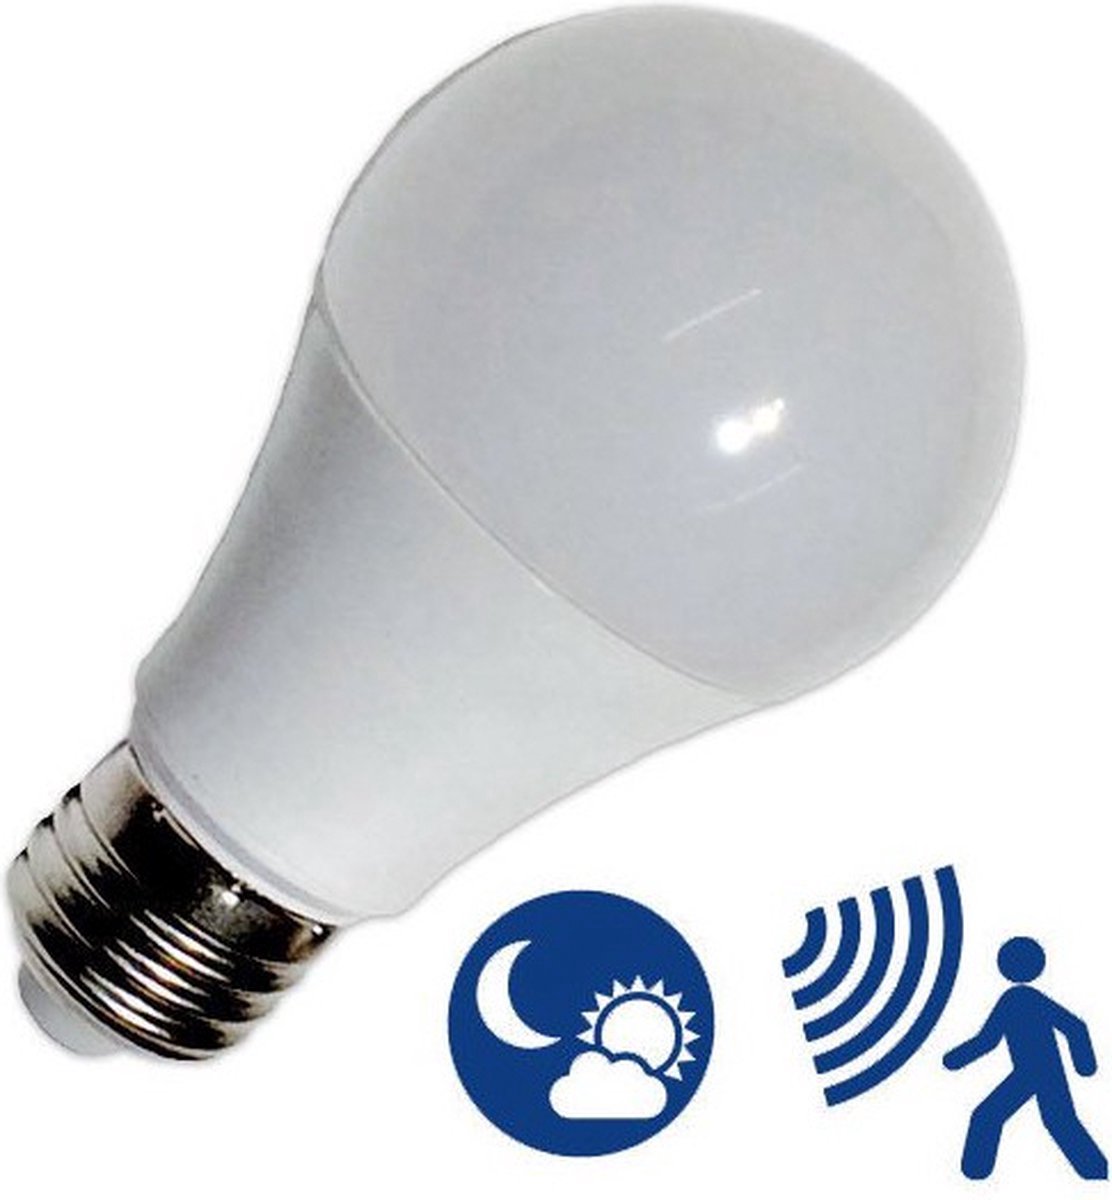 Sensor LED Lamp E27 met bewegingssensor - Bewegingssensor & Nachtsensor - Warm wit